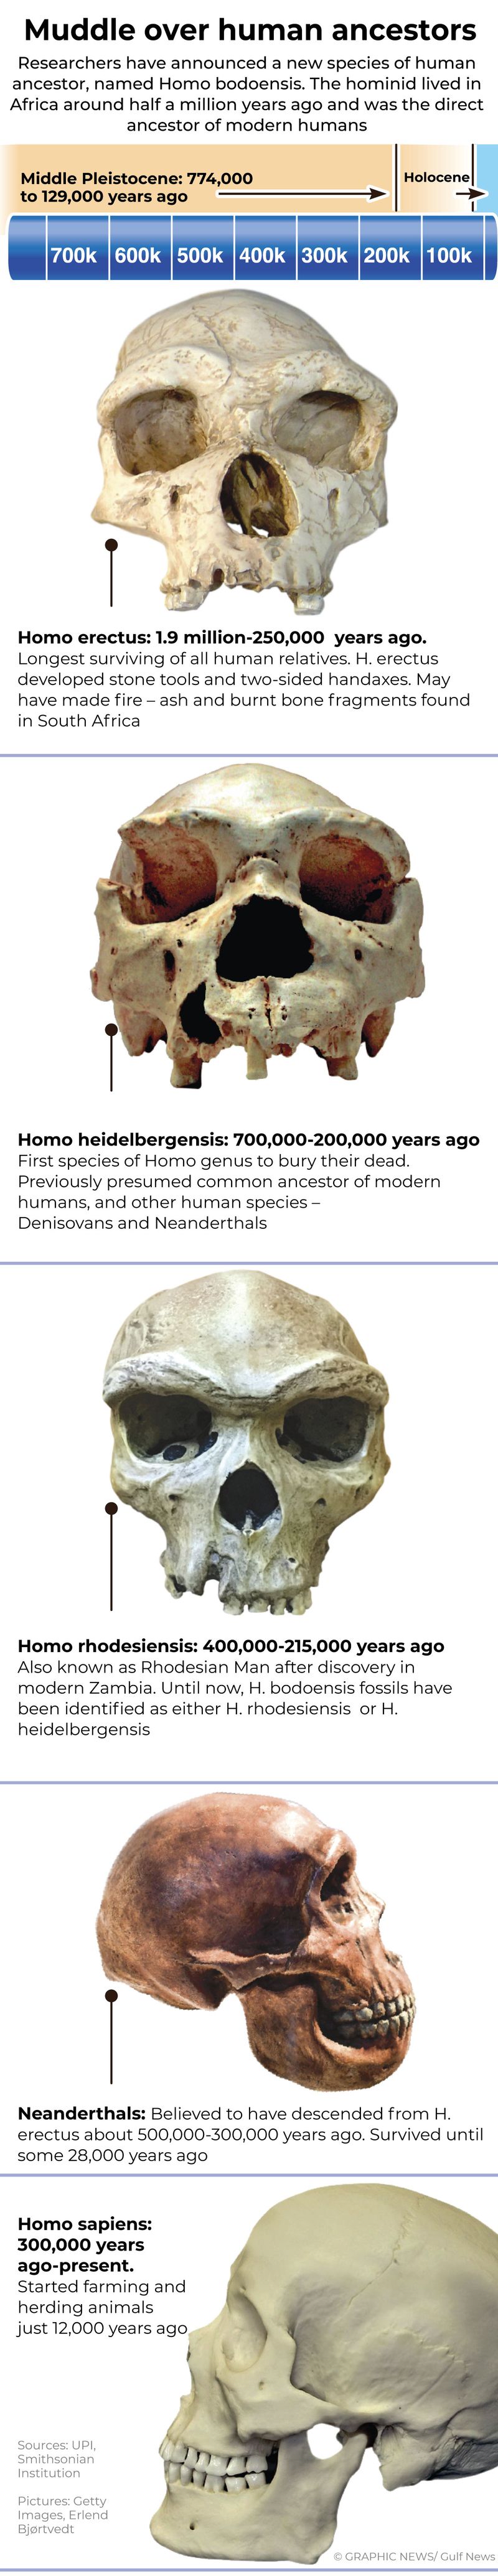 New human ancestor